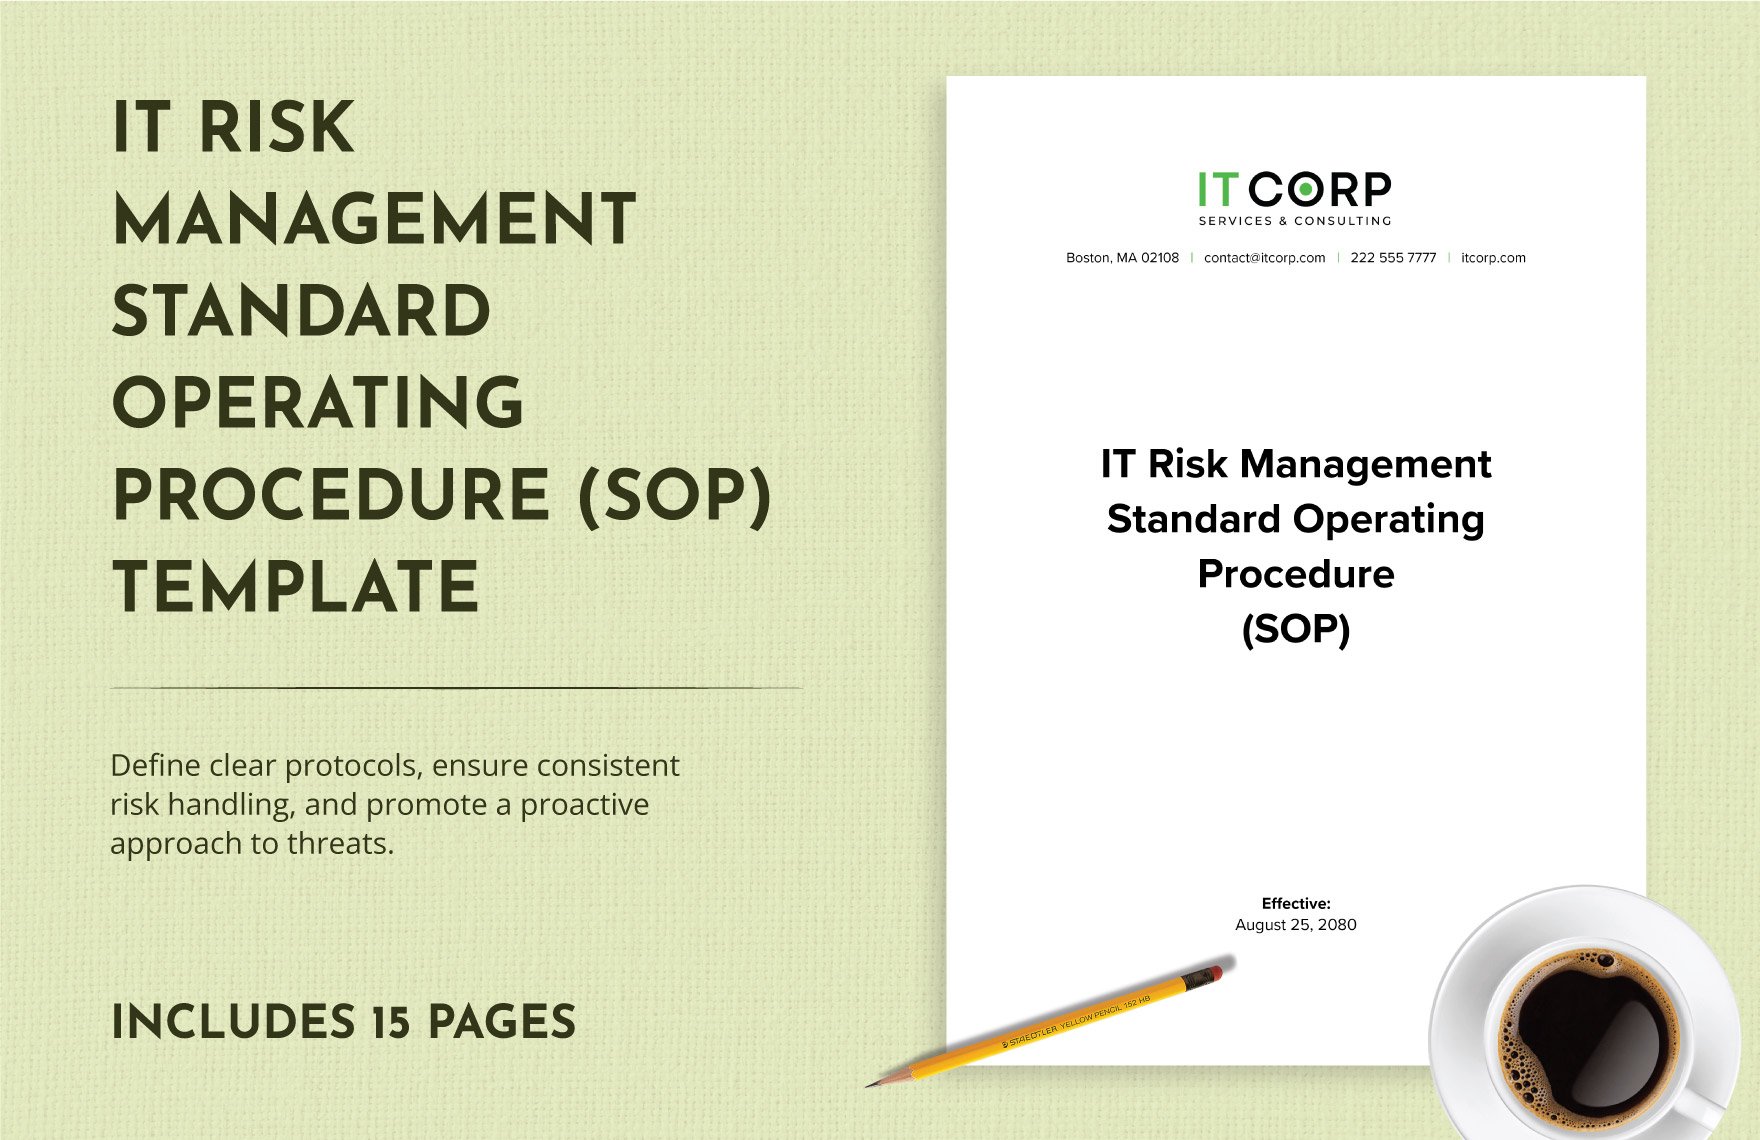 IT Risk Management Standard Operating Procedure (SOP) Template